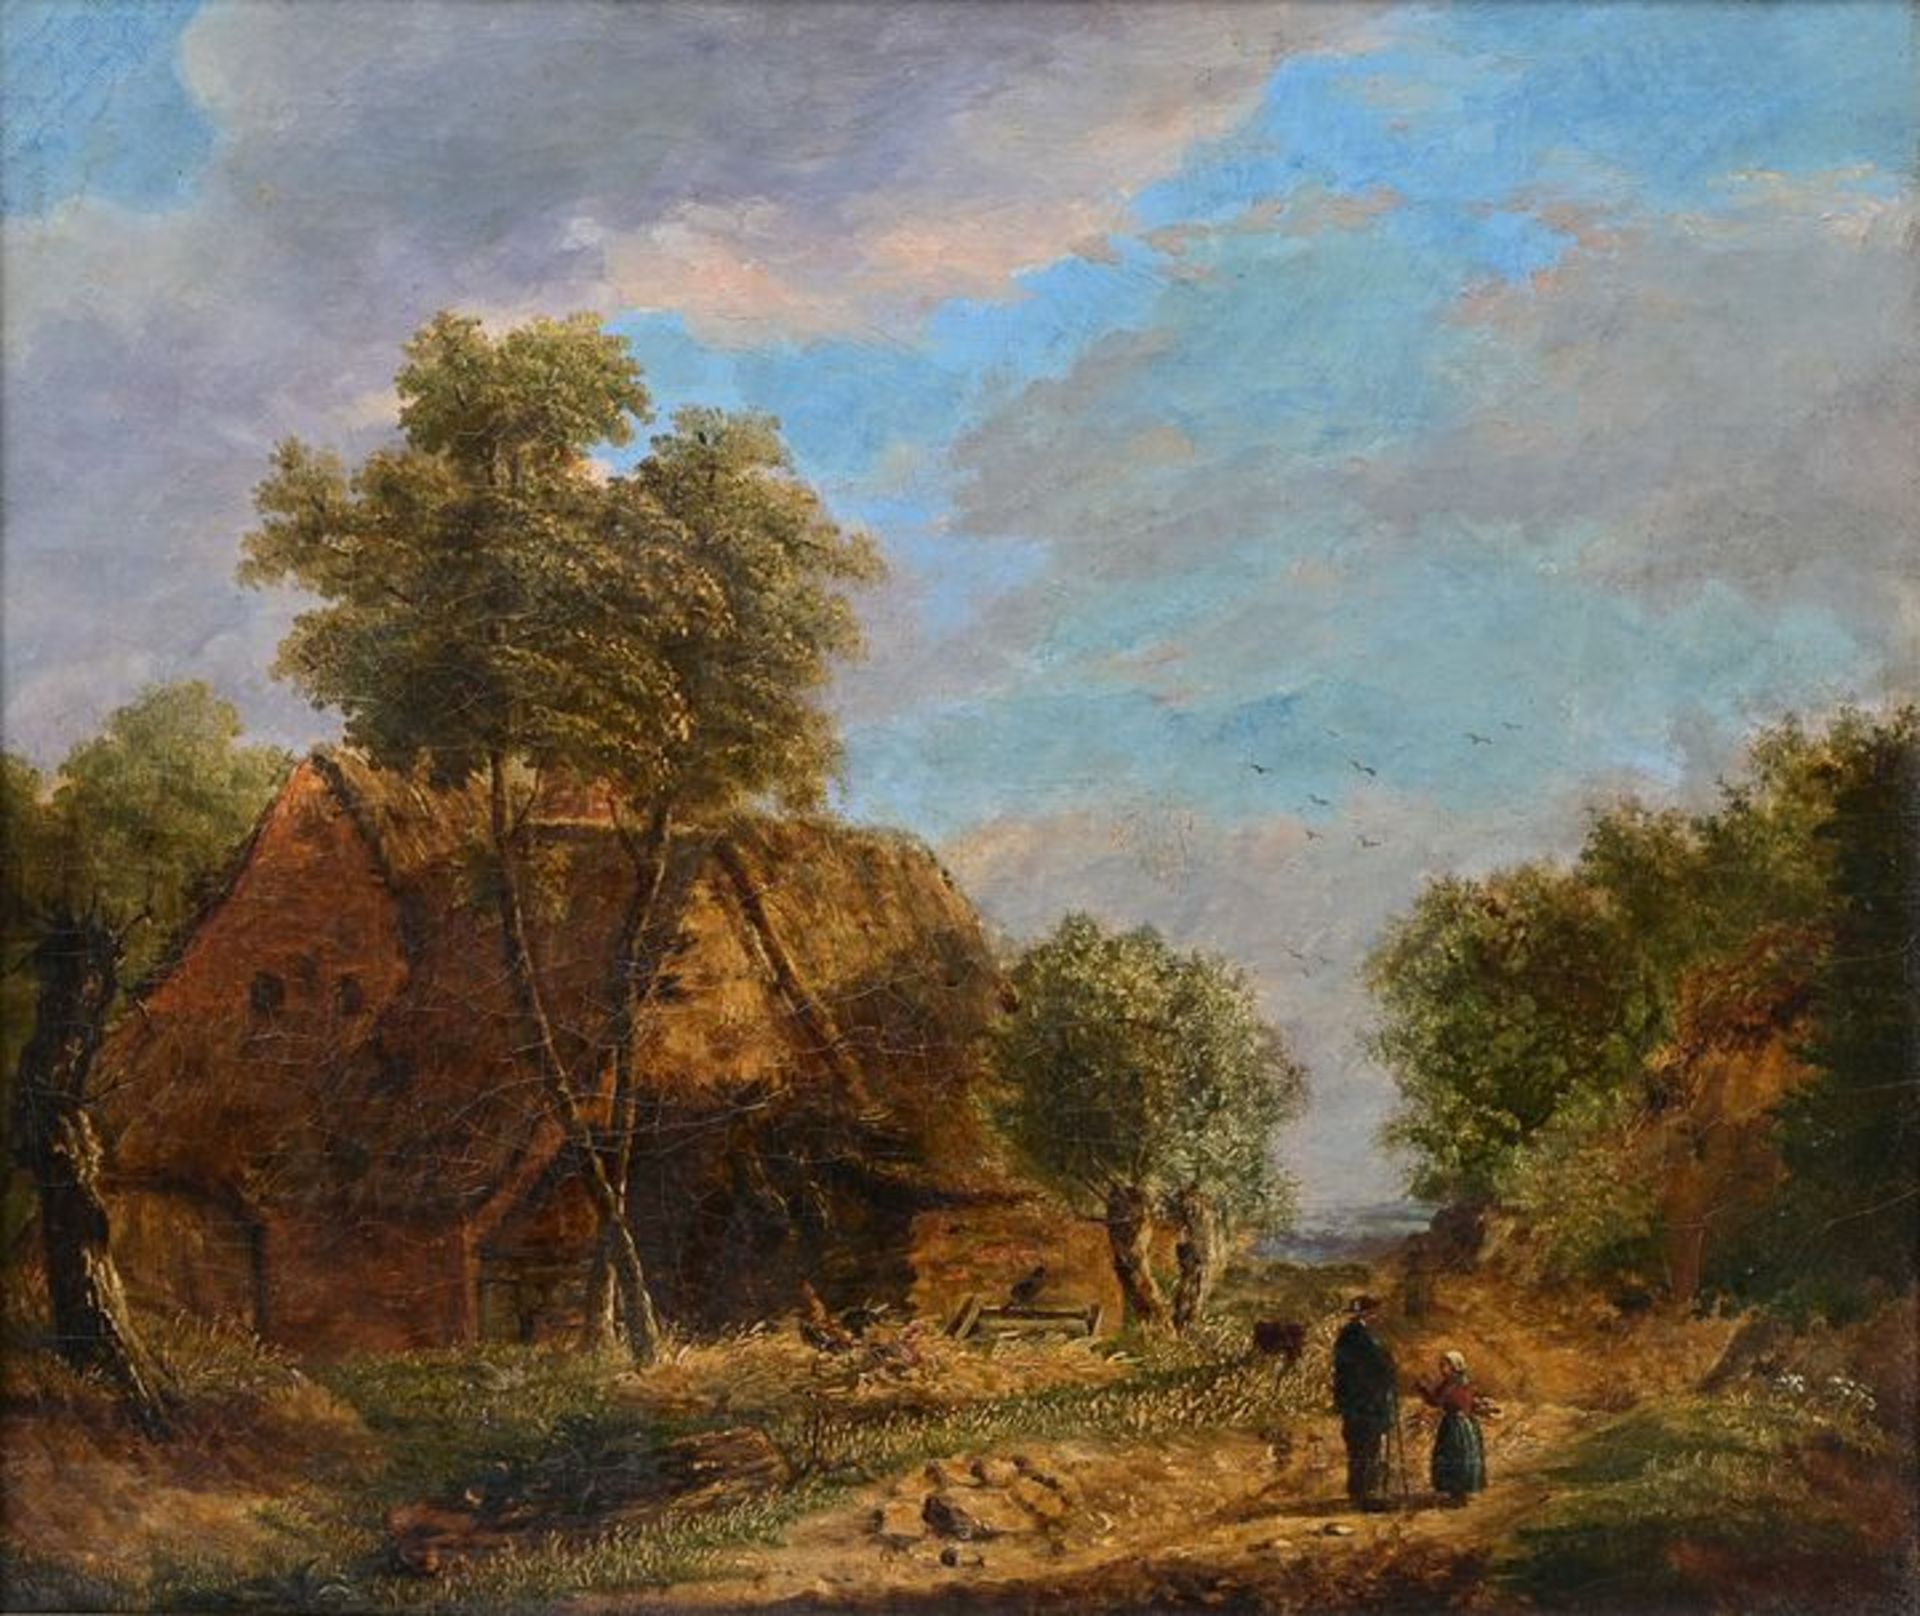 Bayley, Chapman, Landschaft / landscape painting